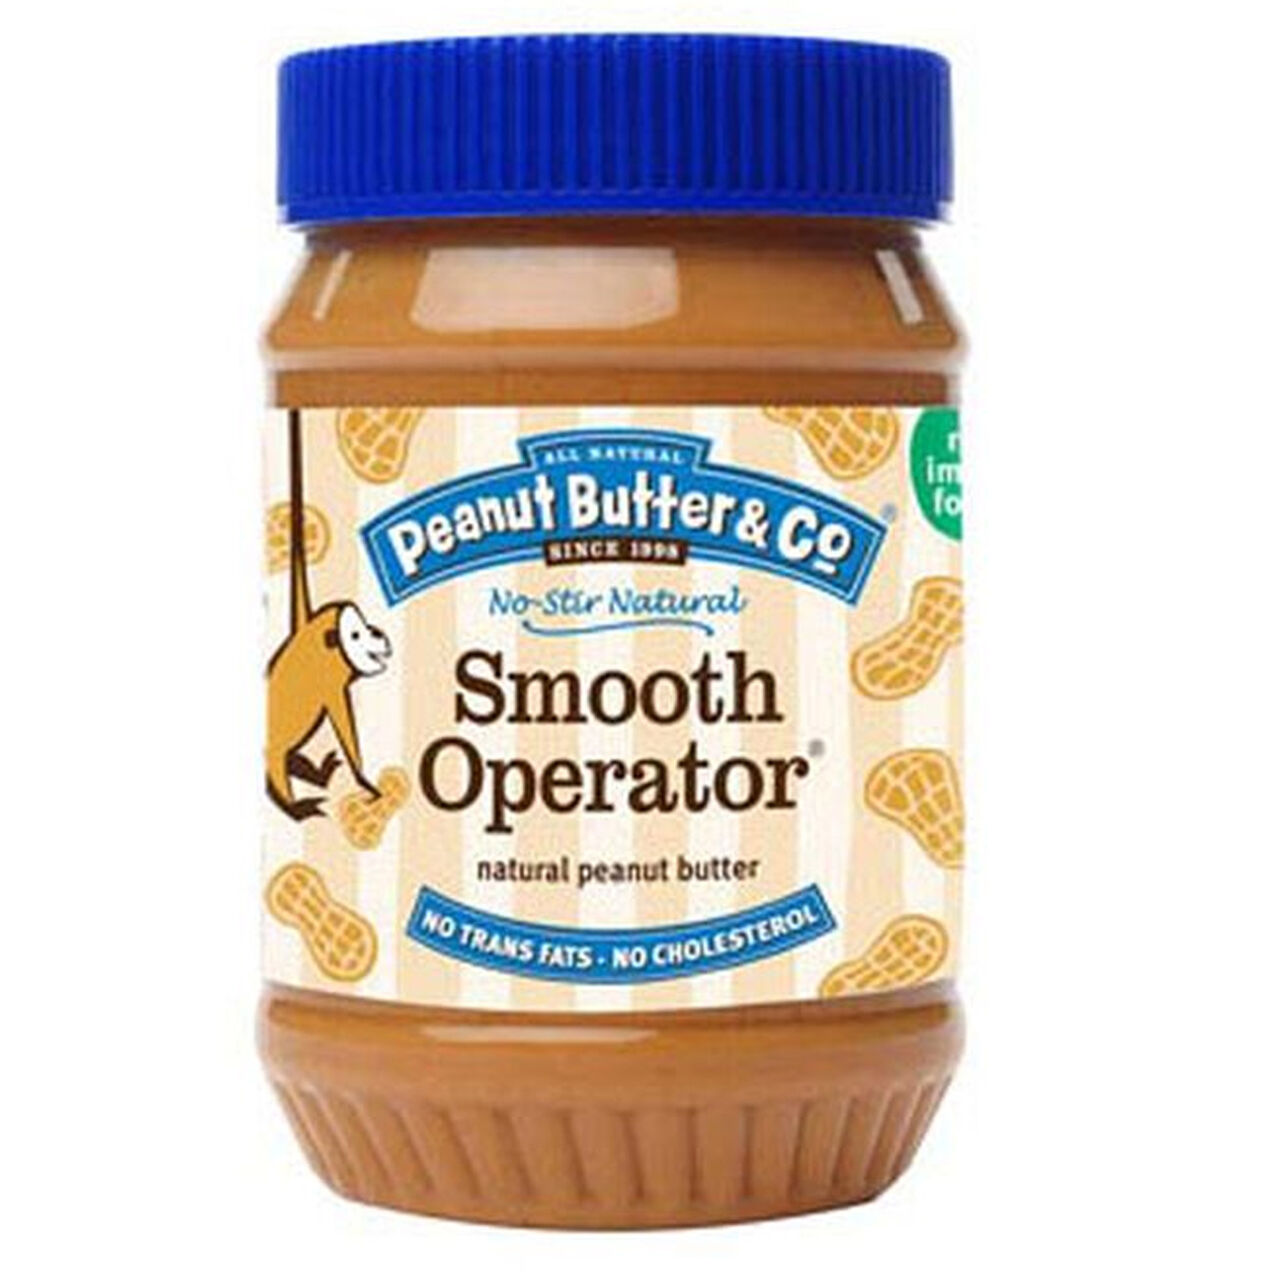 All Natural Peanut Butter & Co. Smooth Operator - 16oz (Kosher), , large image number 0